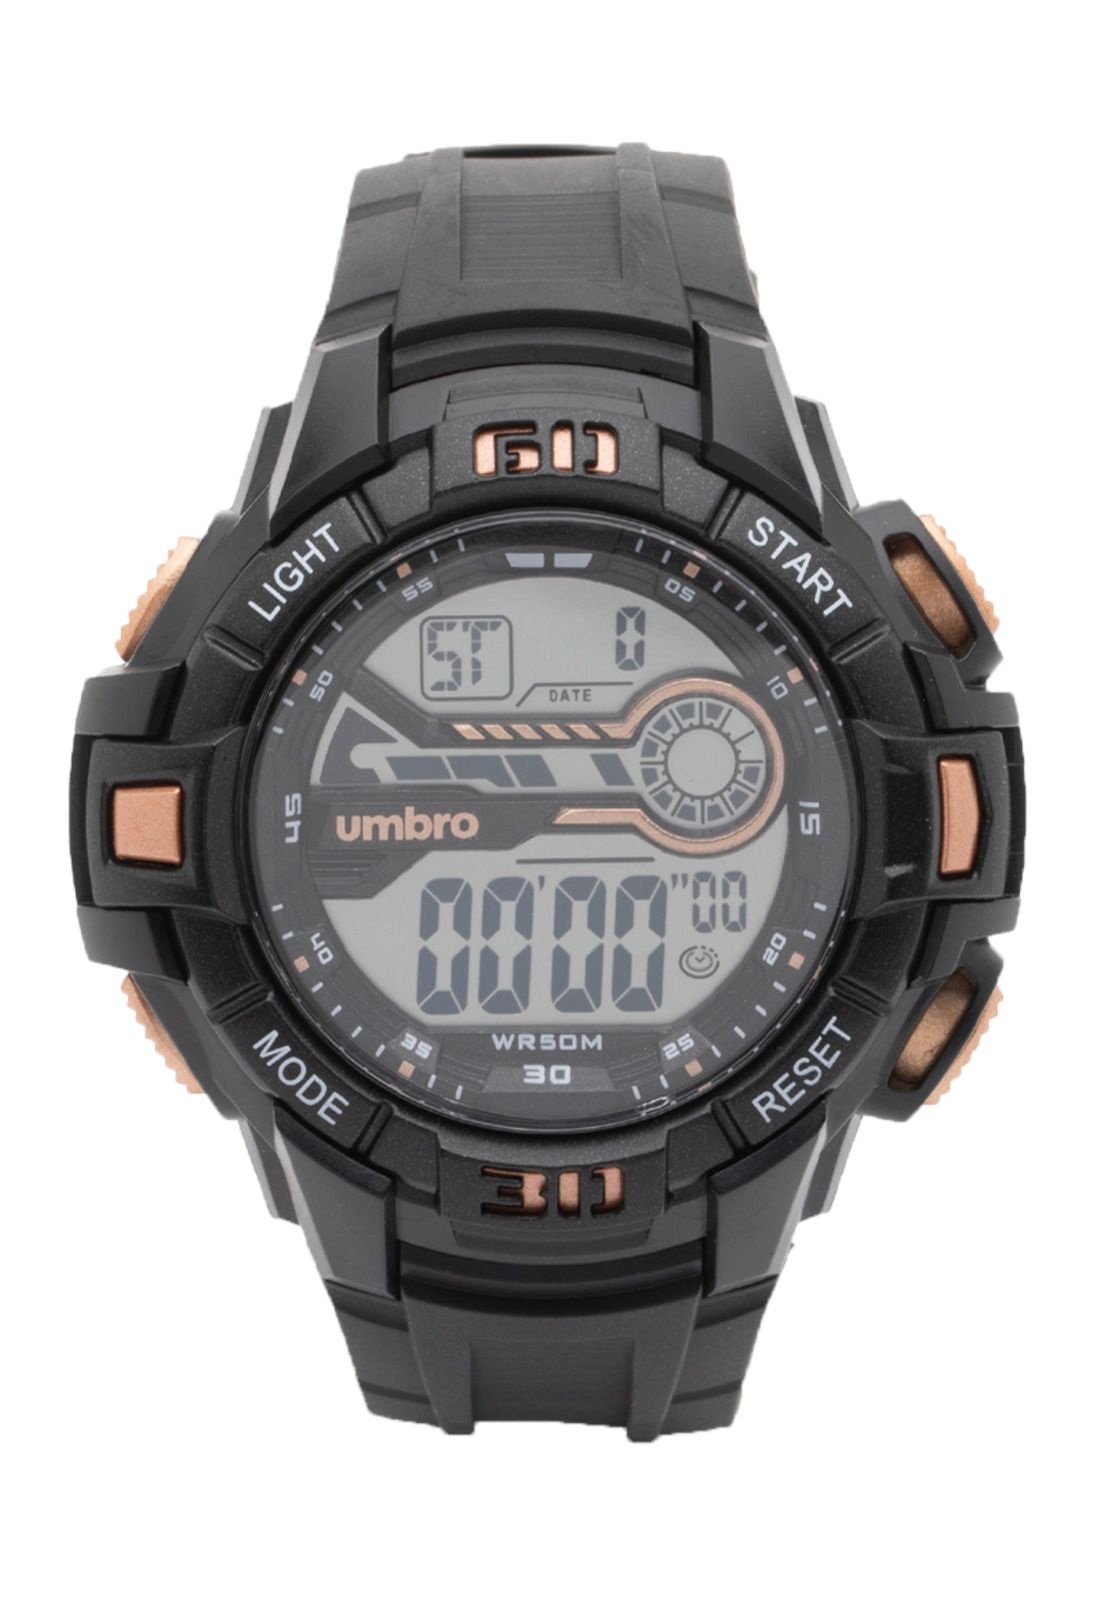 Reloj Umbro UMB-156-4 Negro Hombre